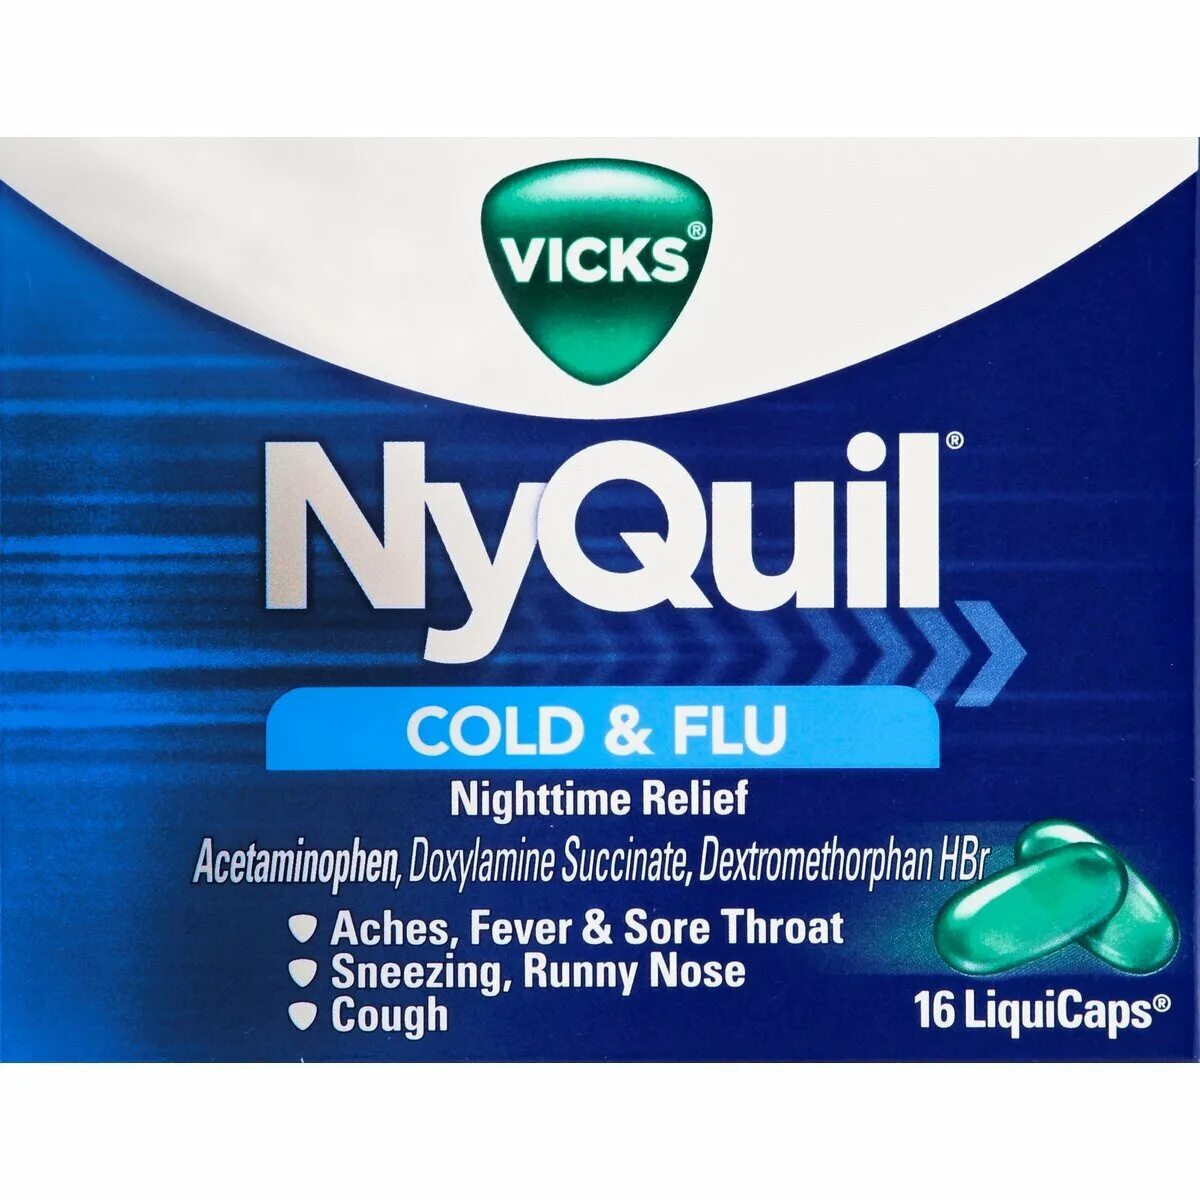 Vicks таблетки от простуды. Лекарство Cold Flu Relief. Vicks Night time. Nyquil. Cold таблетка